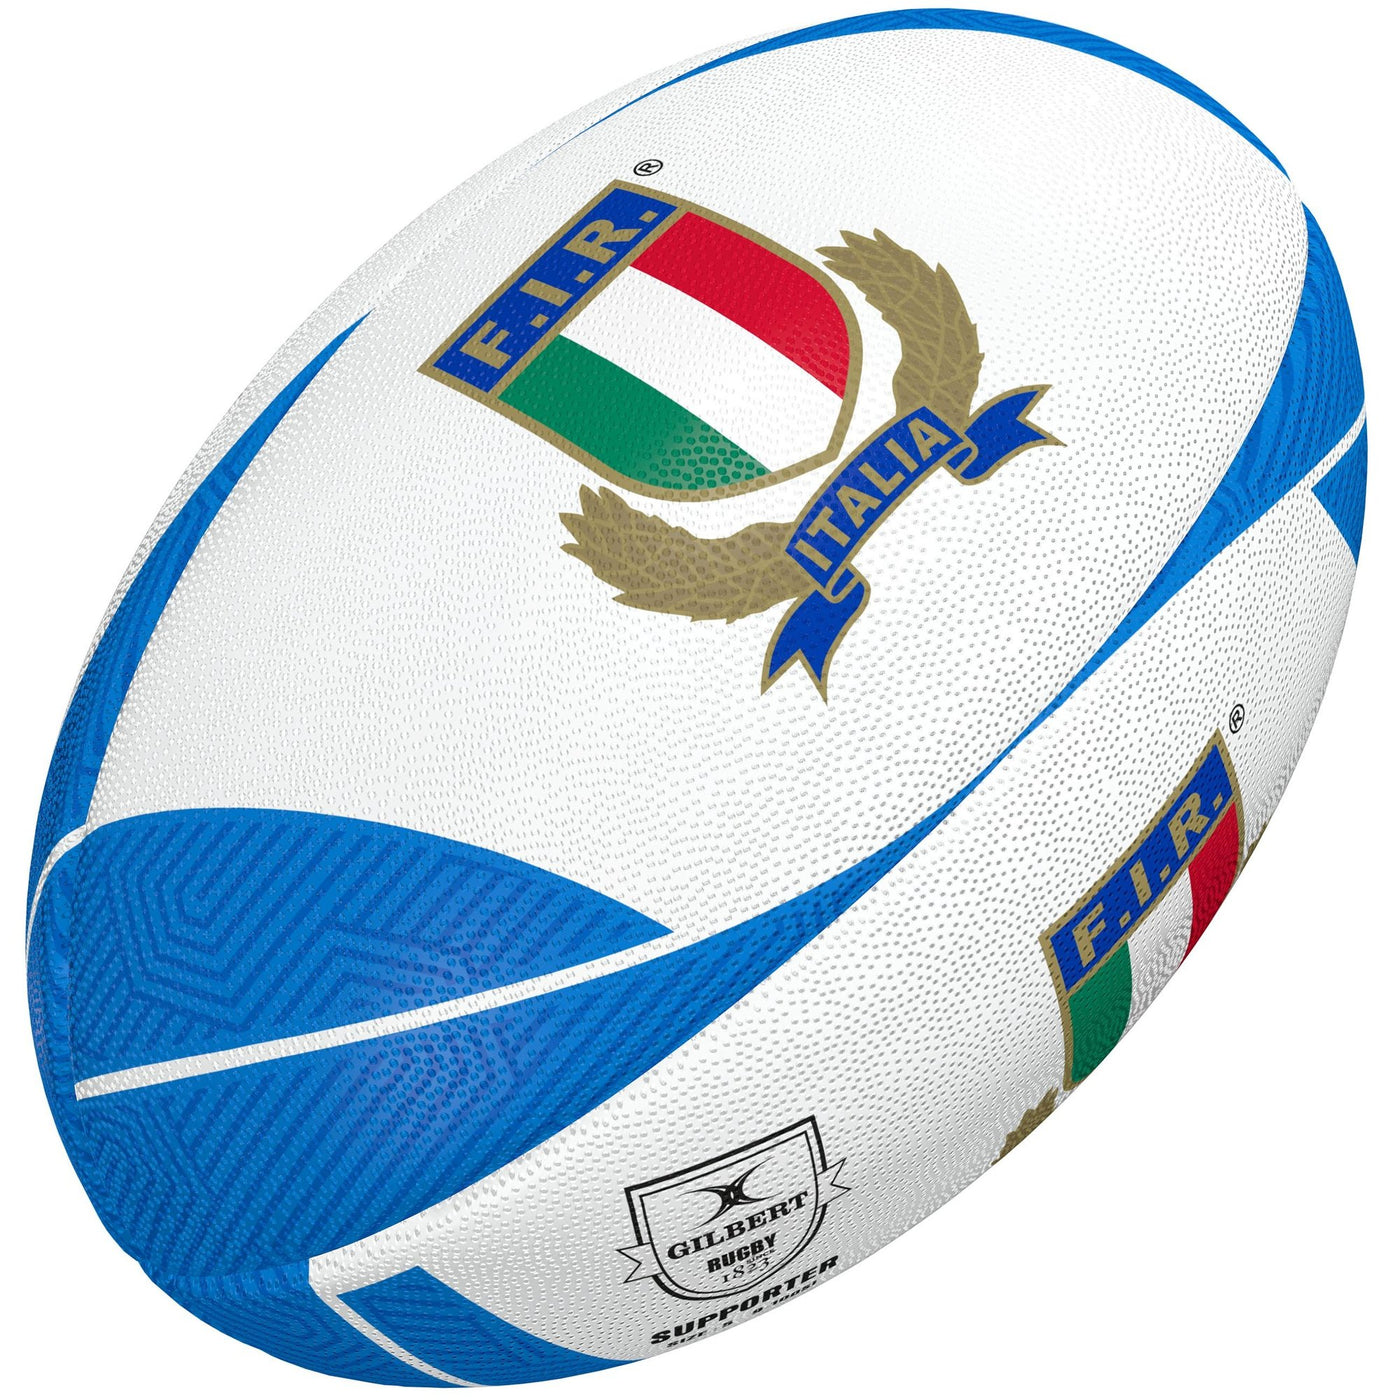 Italie Supporteur de ballon de rugby